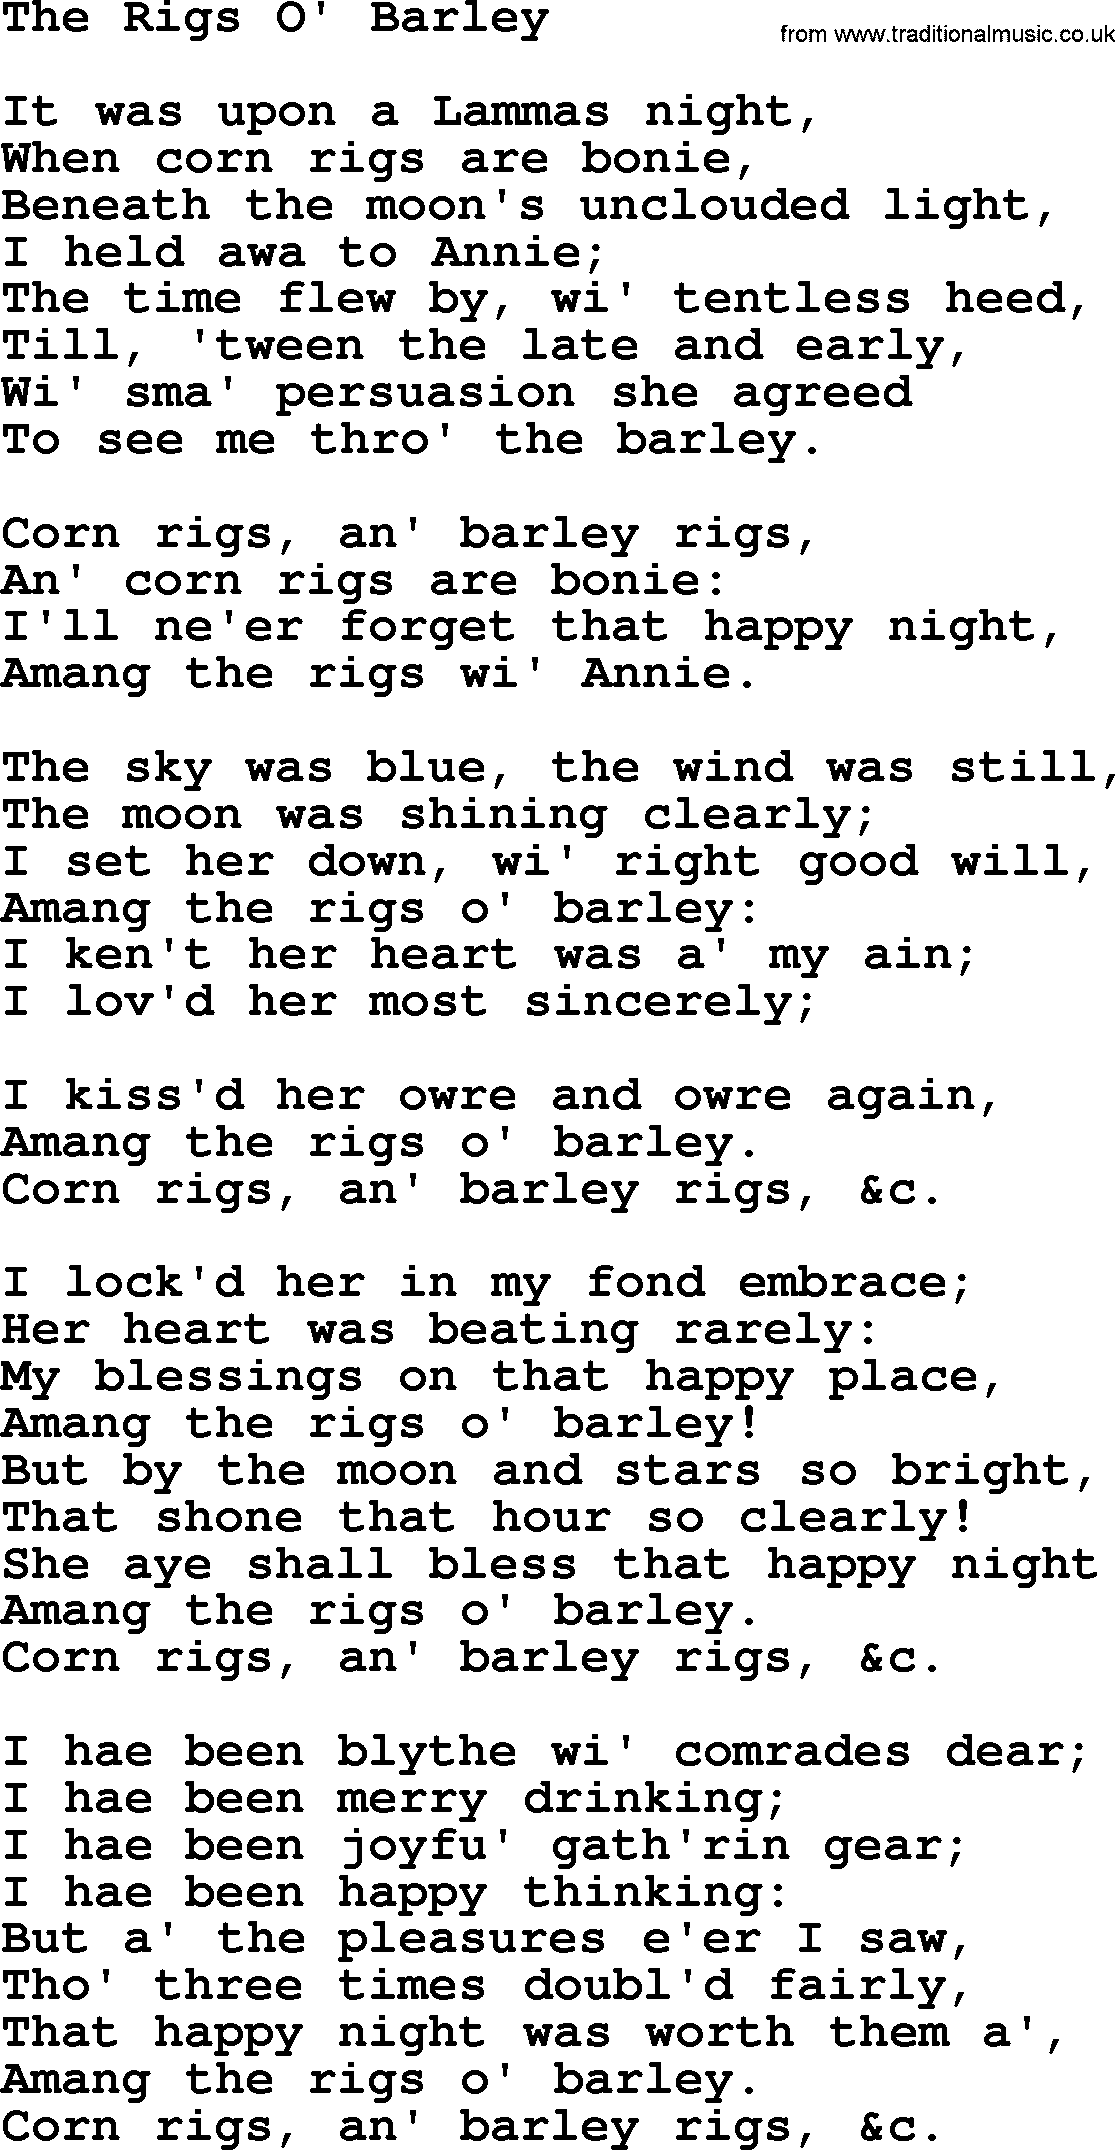 Robert Burns Songs & Lyrics: The Rigs O' Barley